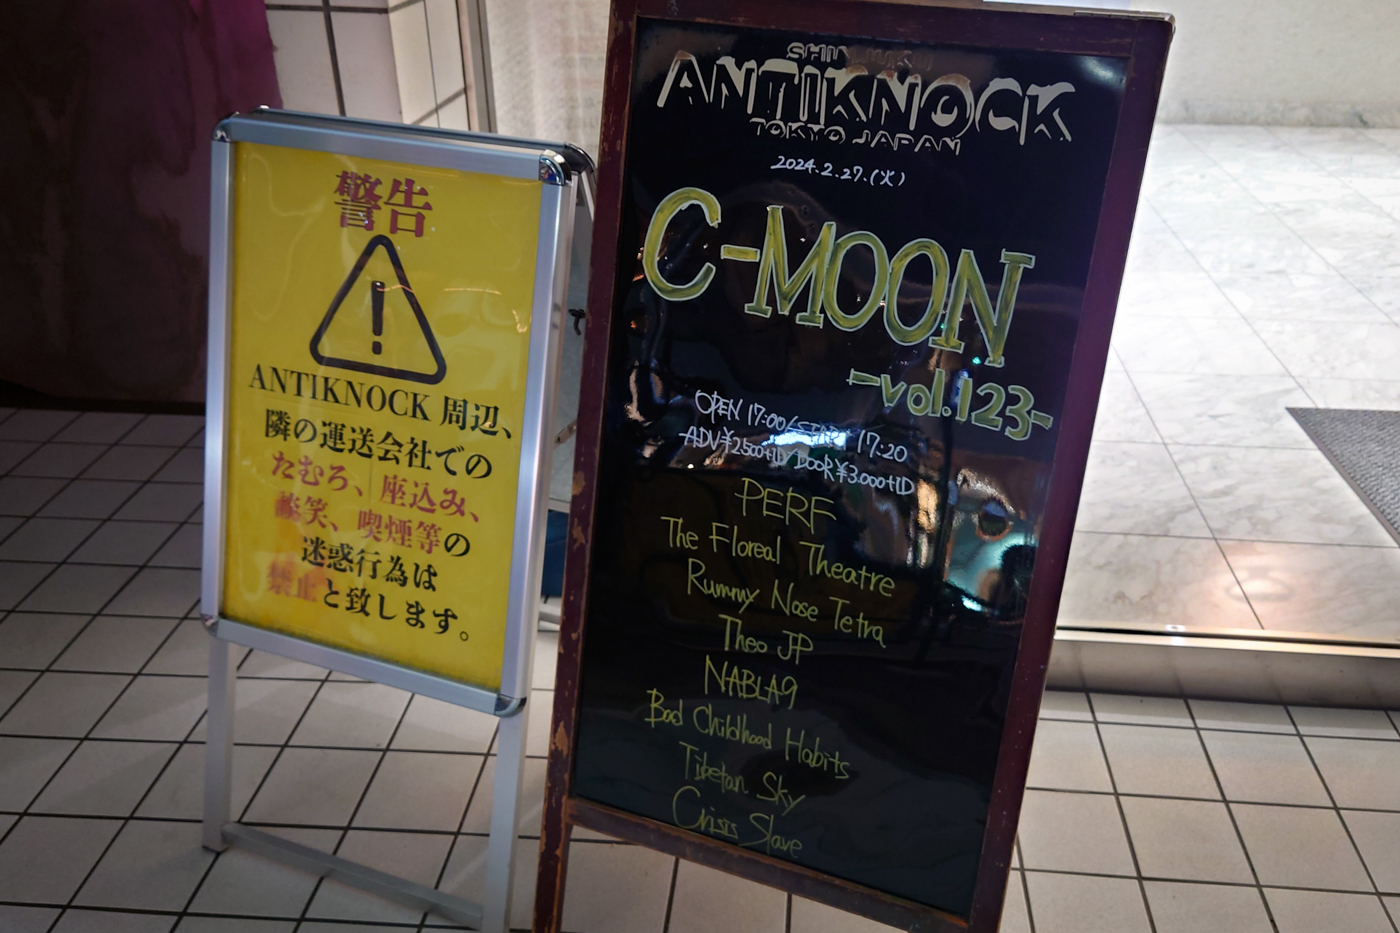 shinjuku ANTIKNOCK presents「C-MOON vol.123」@新宿ANTIKNOCK